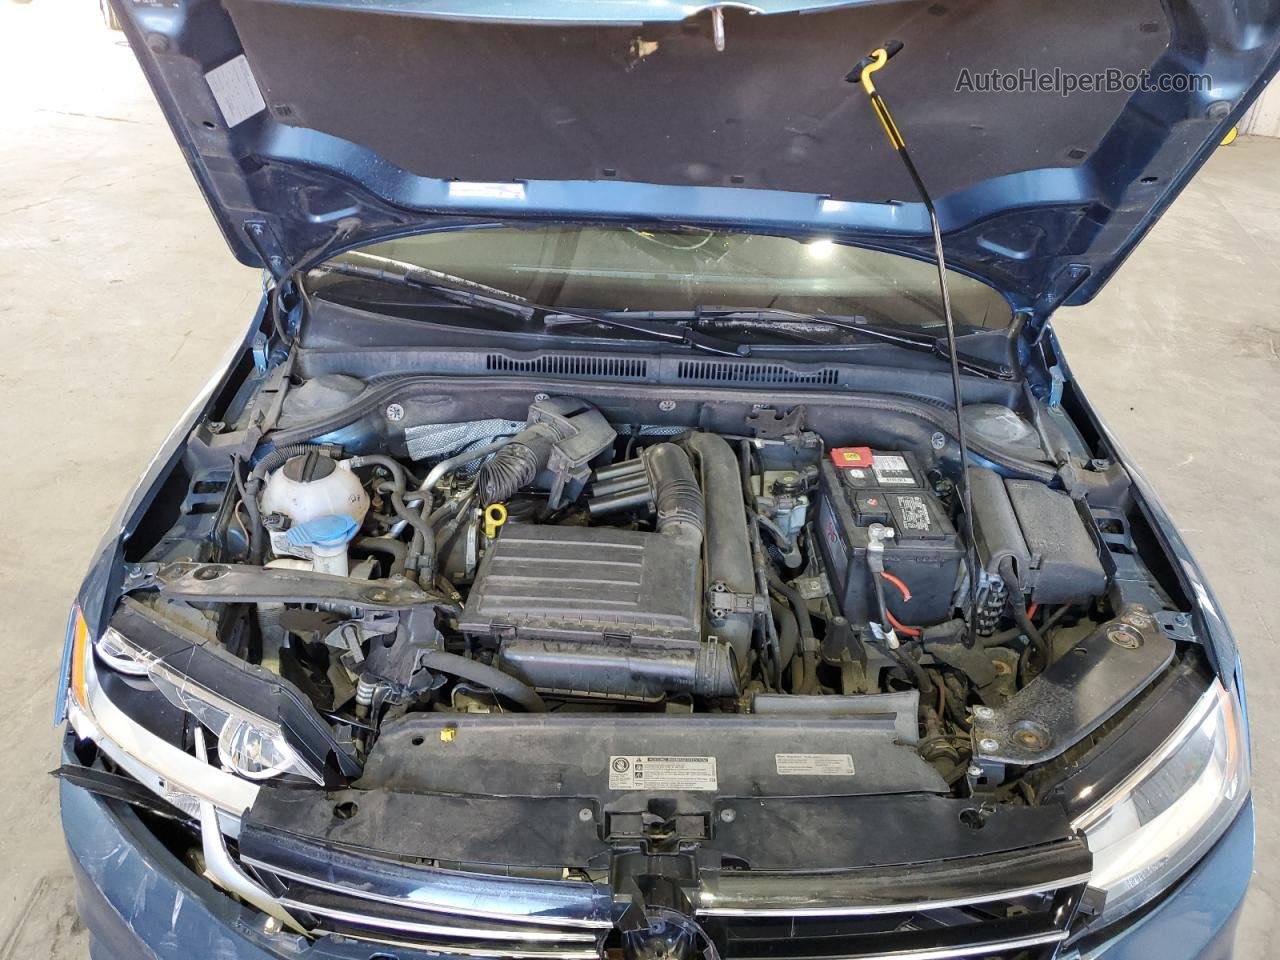 2016 Volkswagen Jetta S Синий vin: 3VW267AJ0GM274052